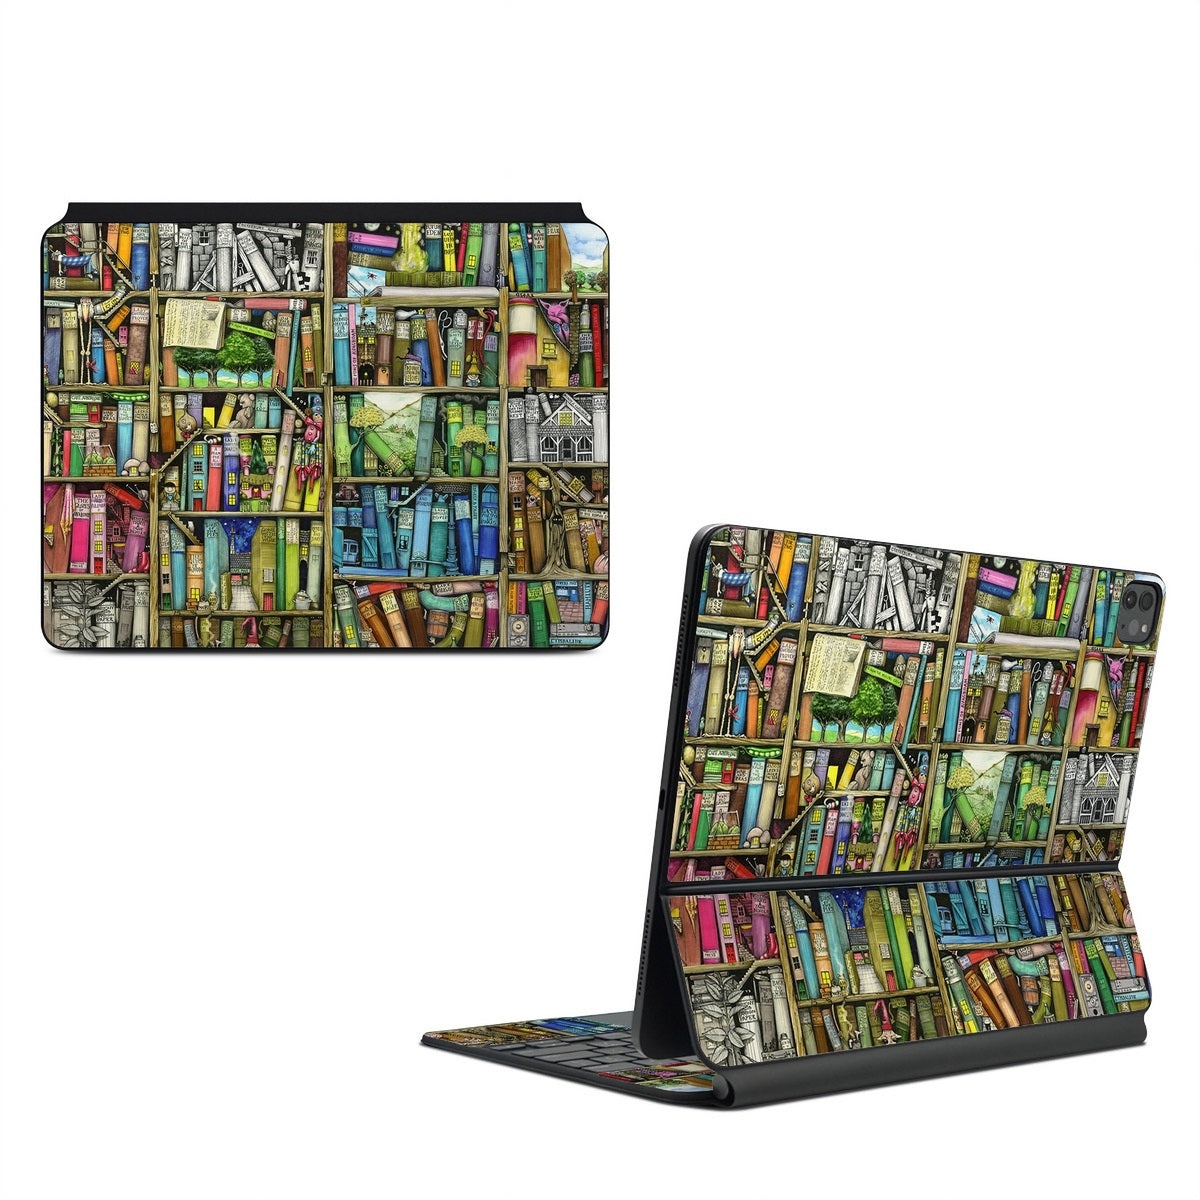 Bookshelf - Apple Magic Keyboard for iPad Skin